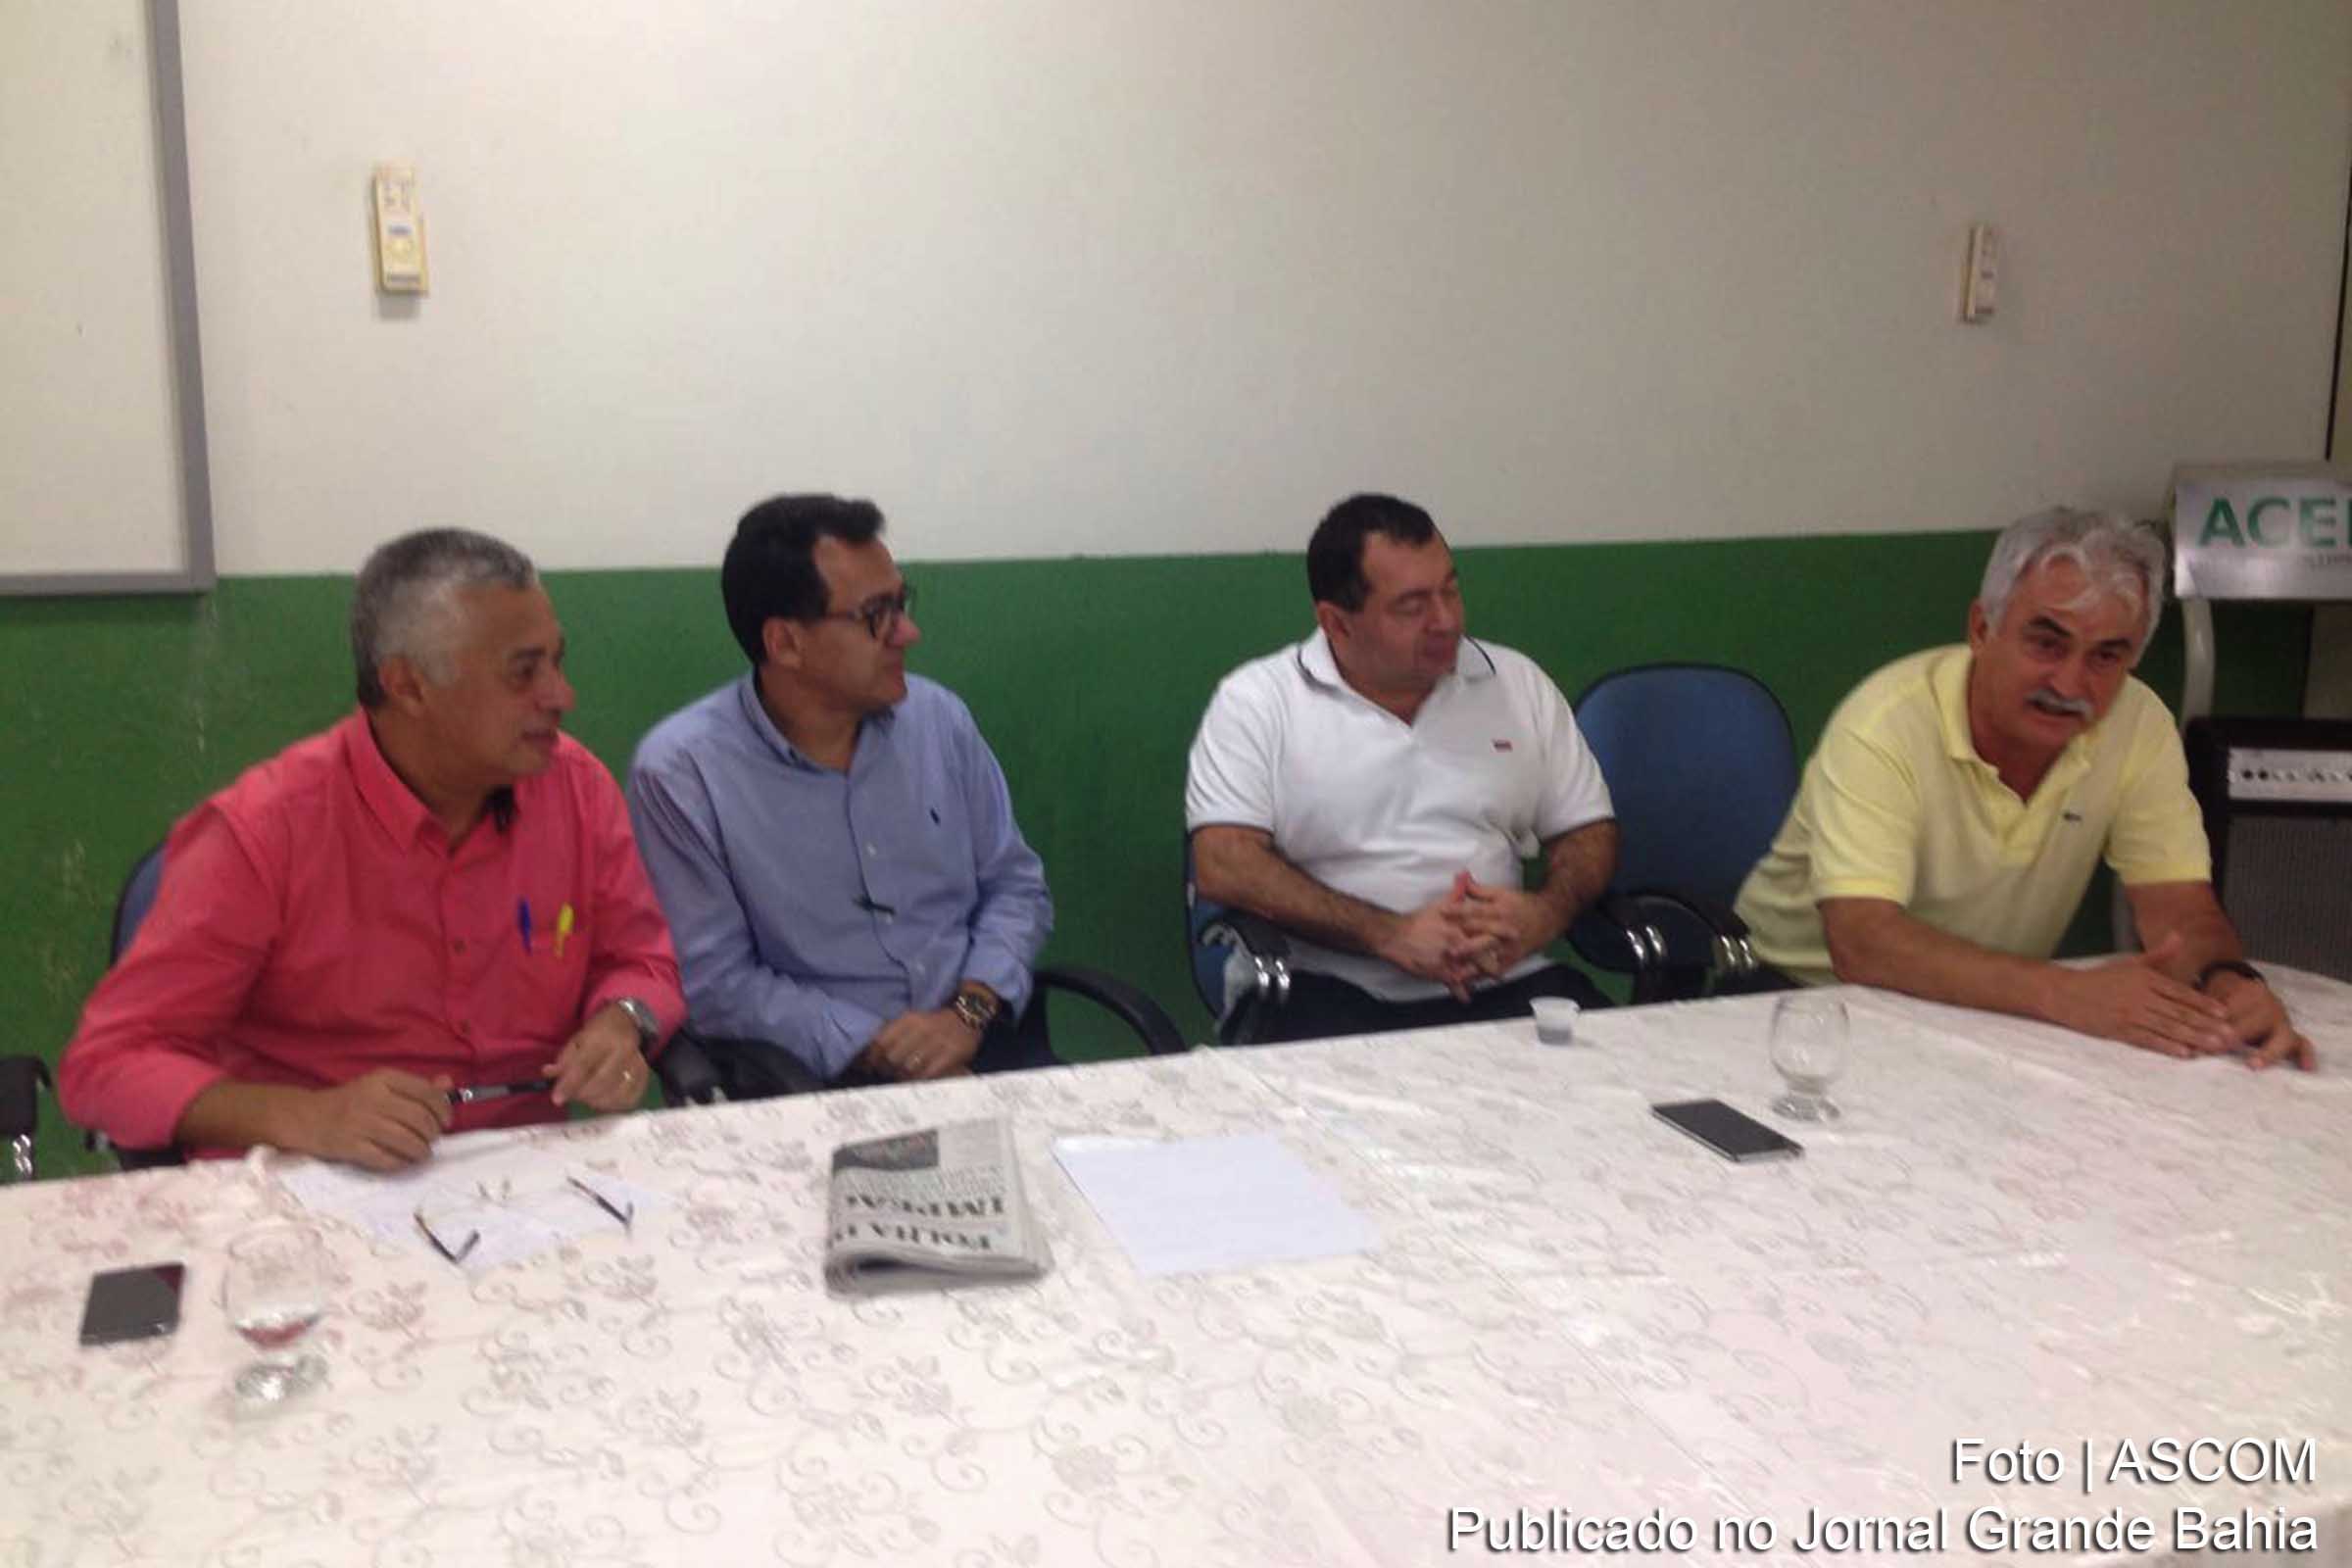 Jair Onofre, Marcelo Alexandrino, Luis Mercês e Humberto Cedraz, durante palestra na ACEFS.